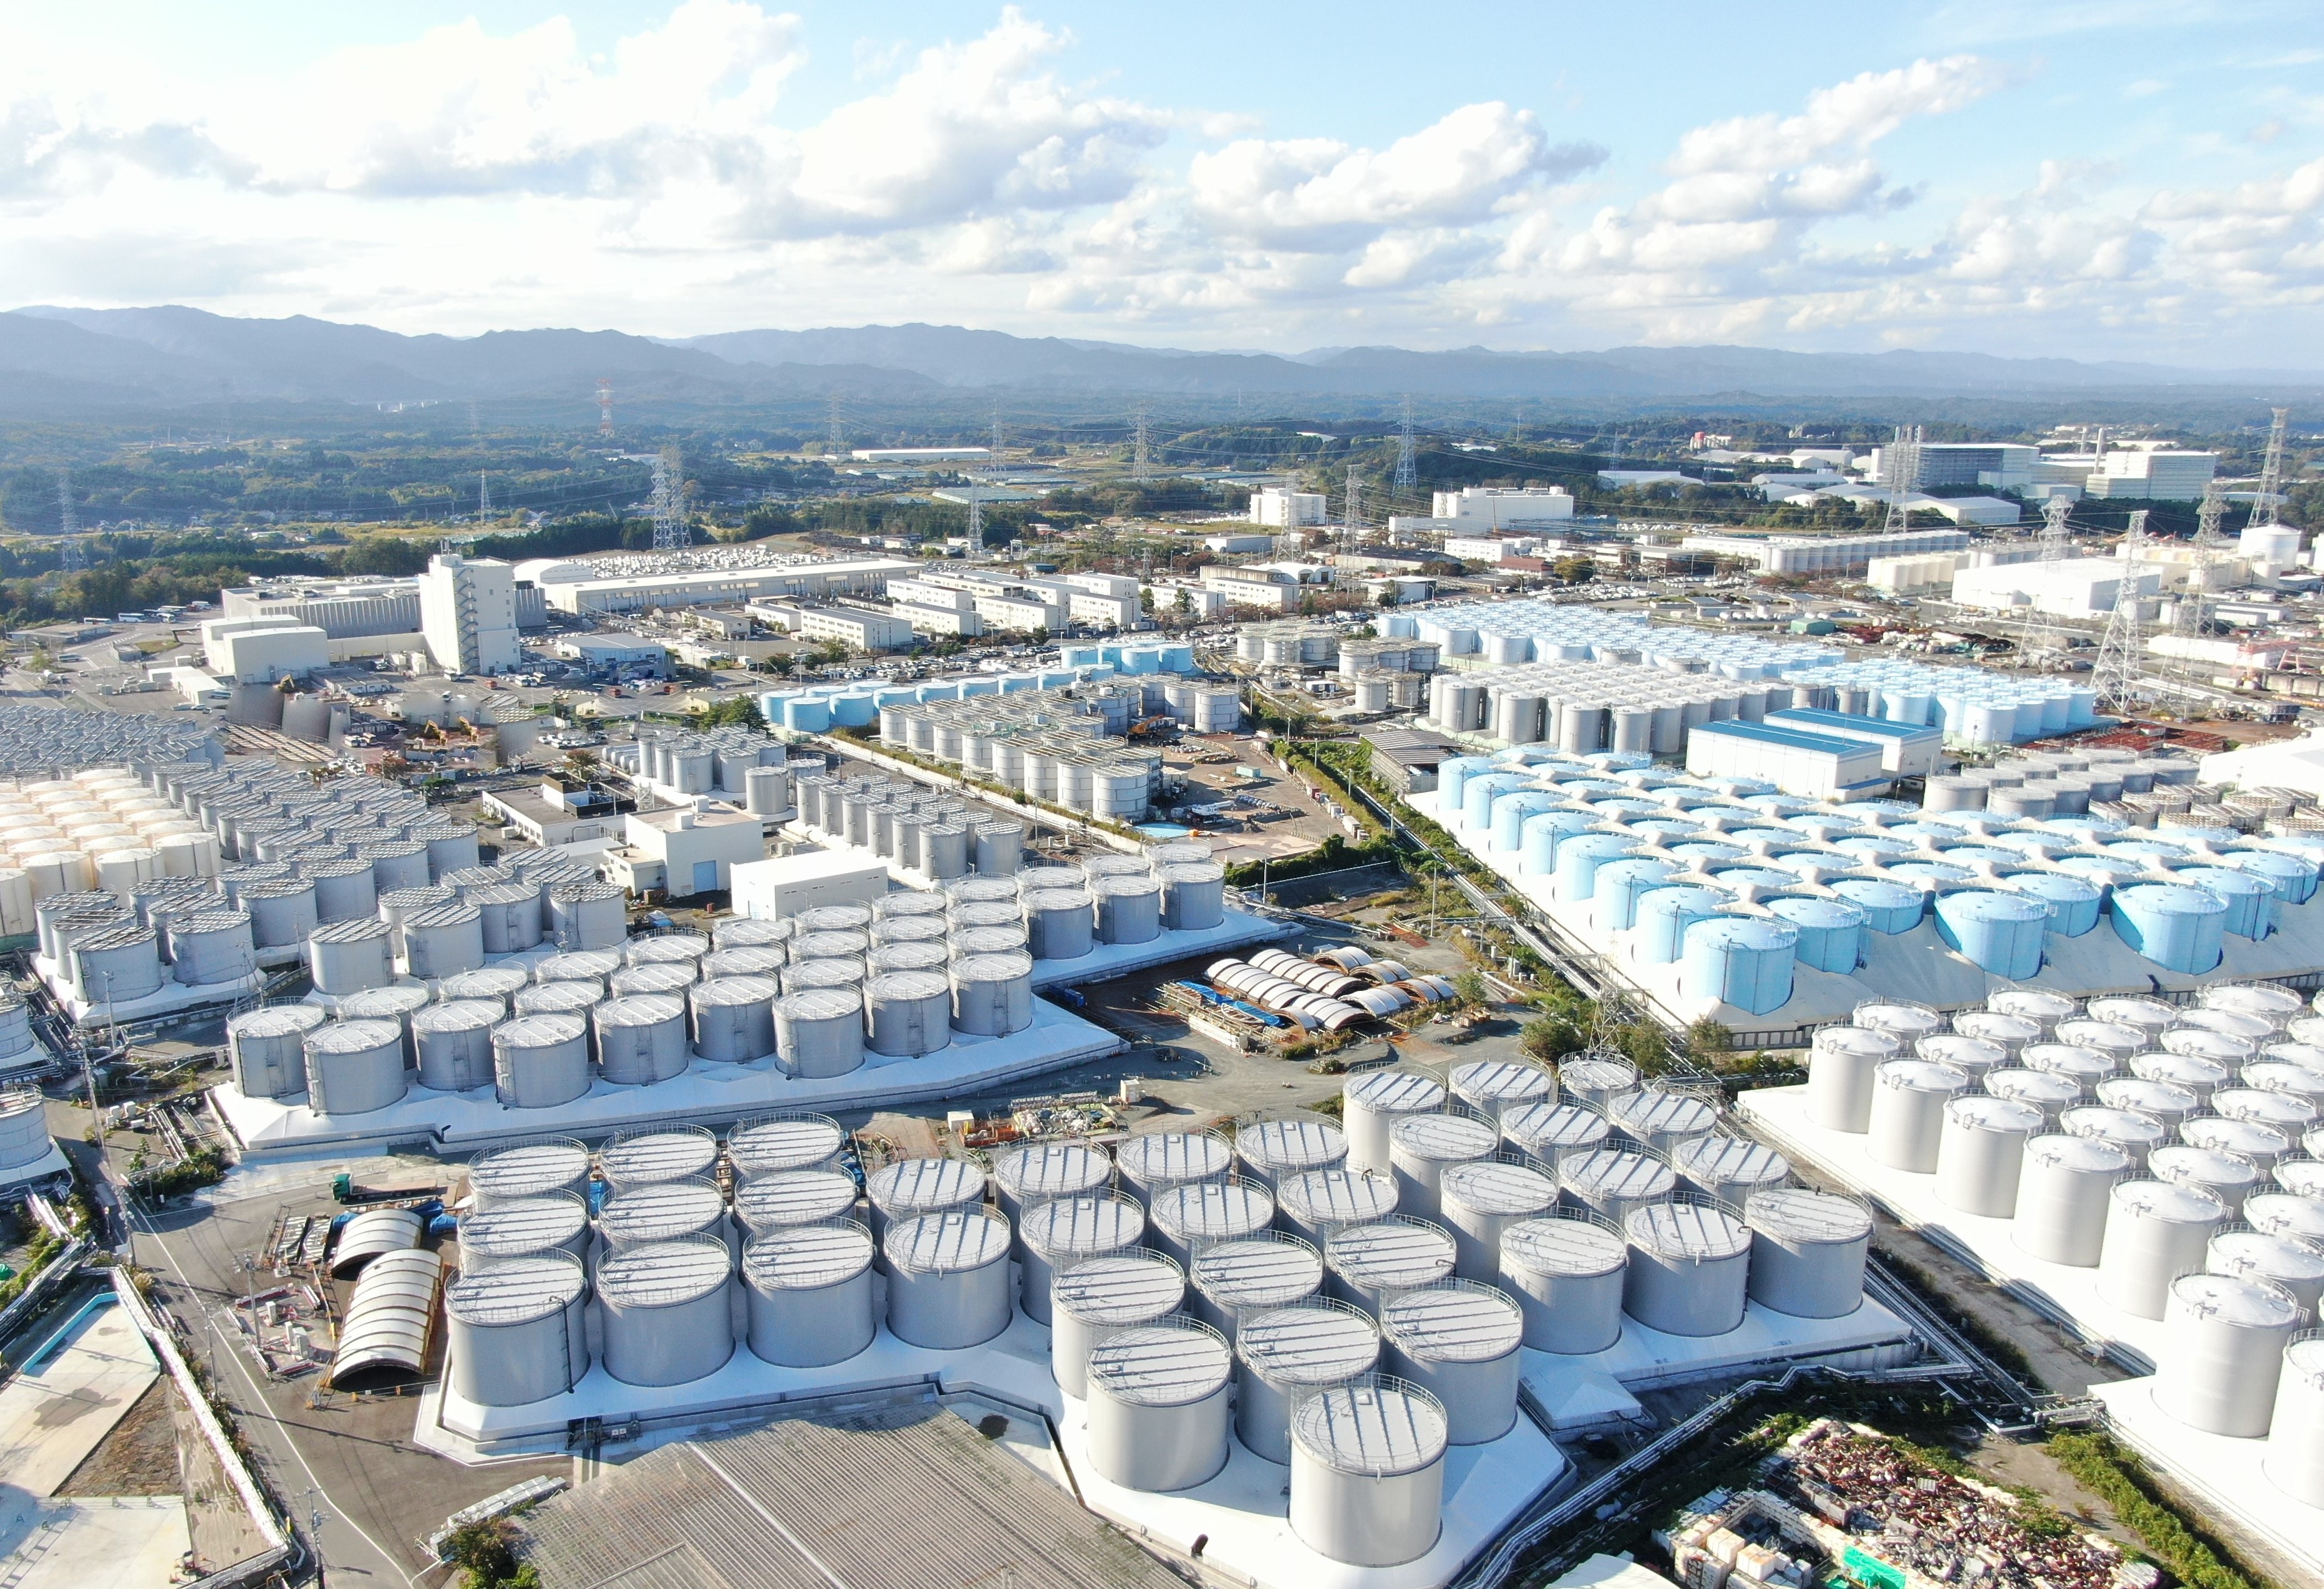 Fukushima plant yard